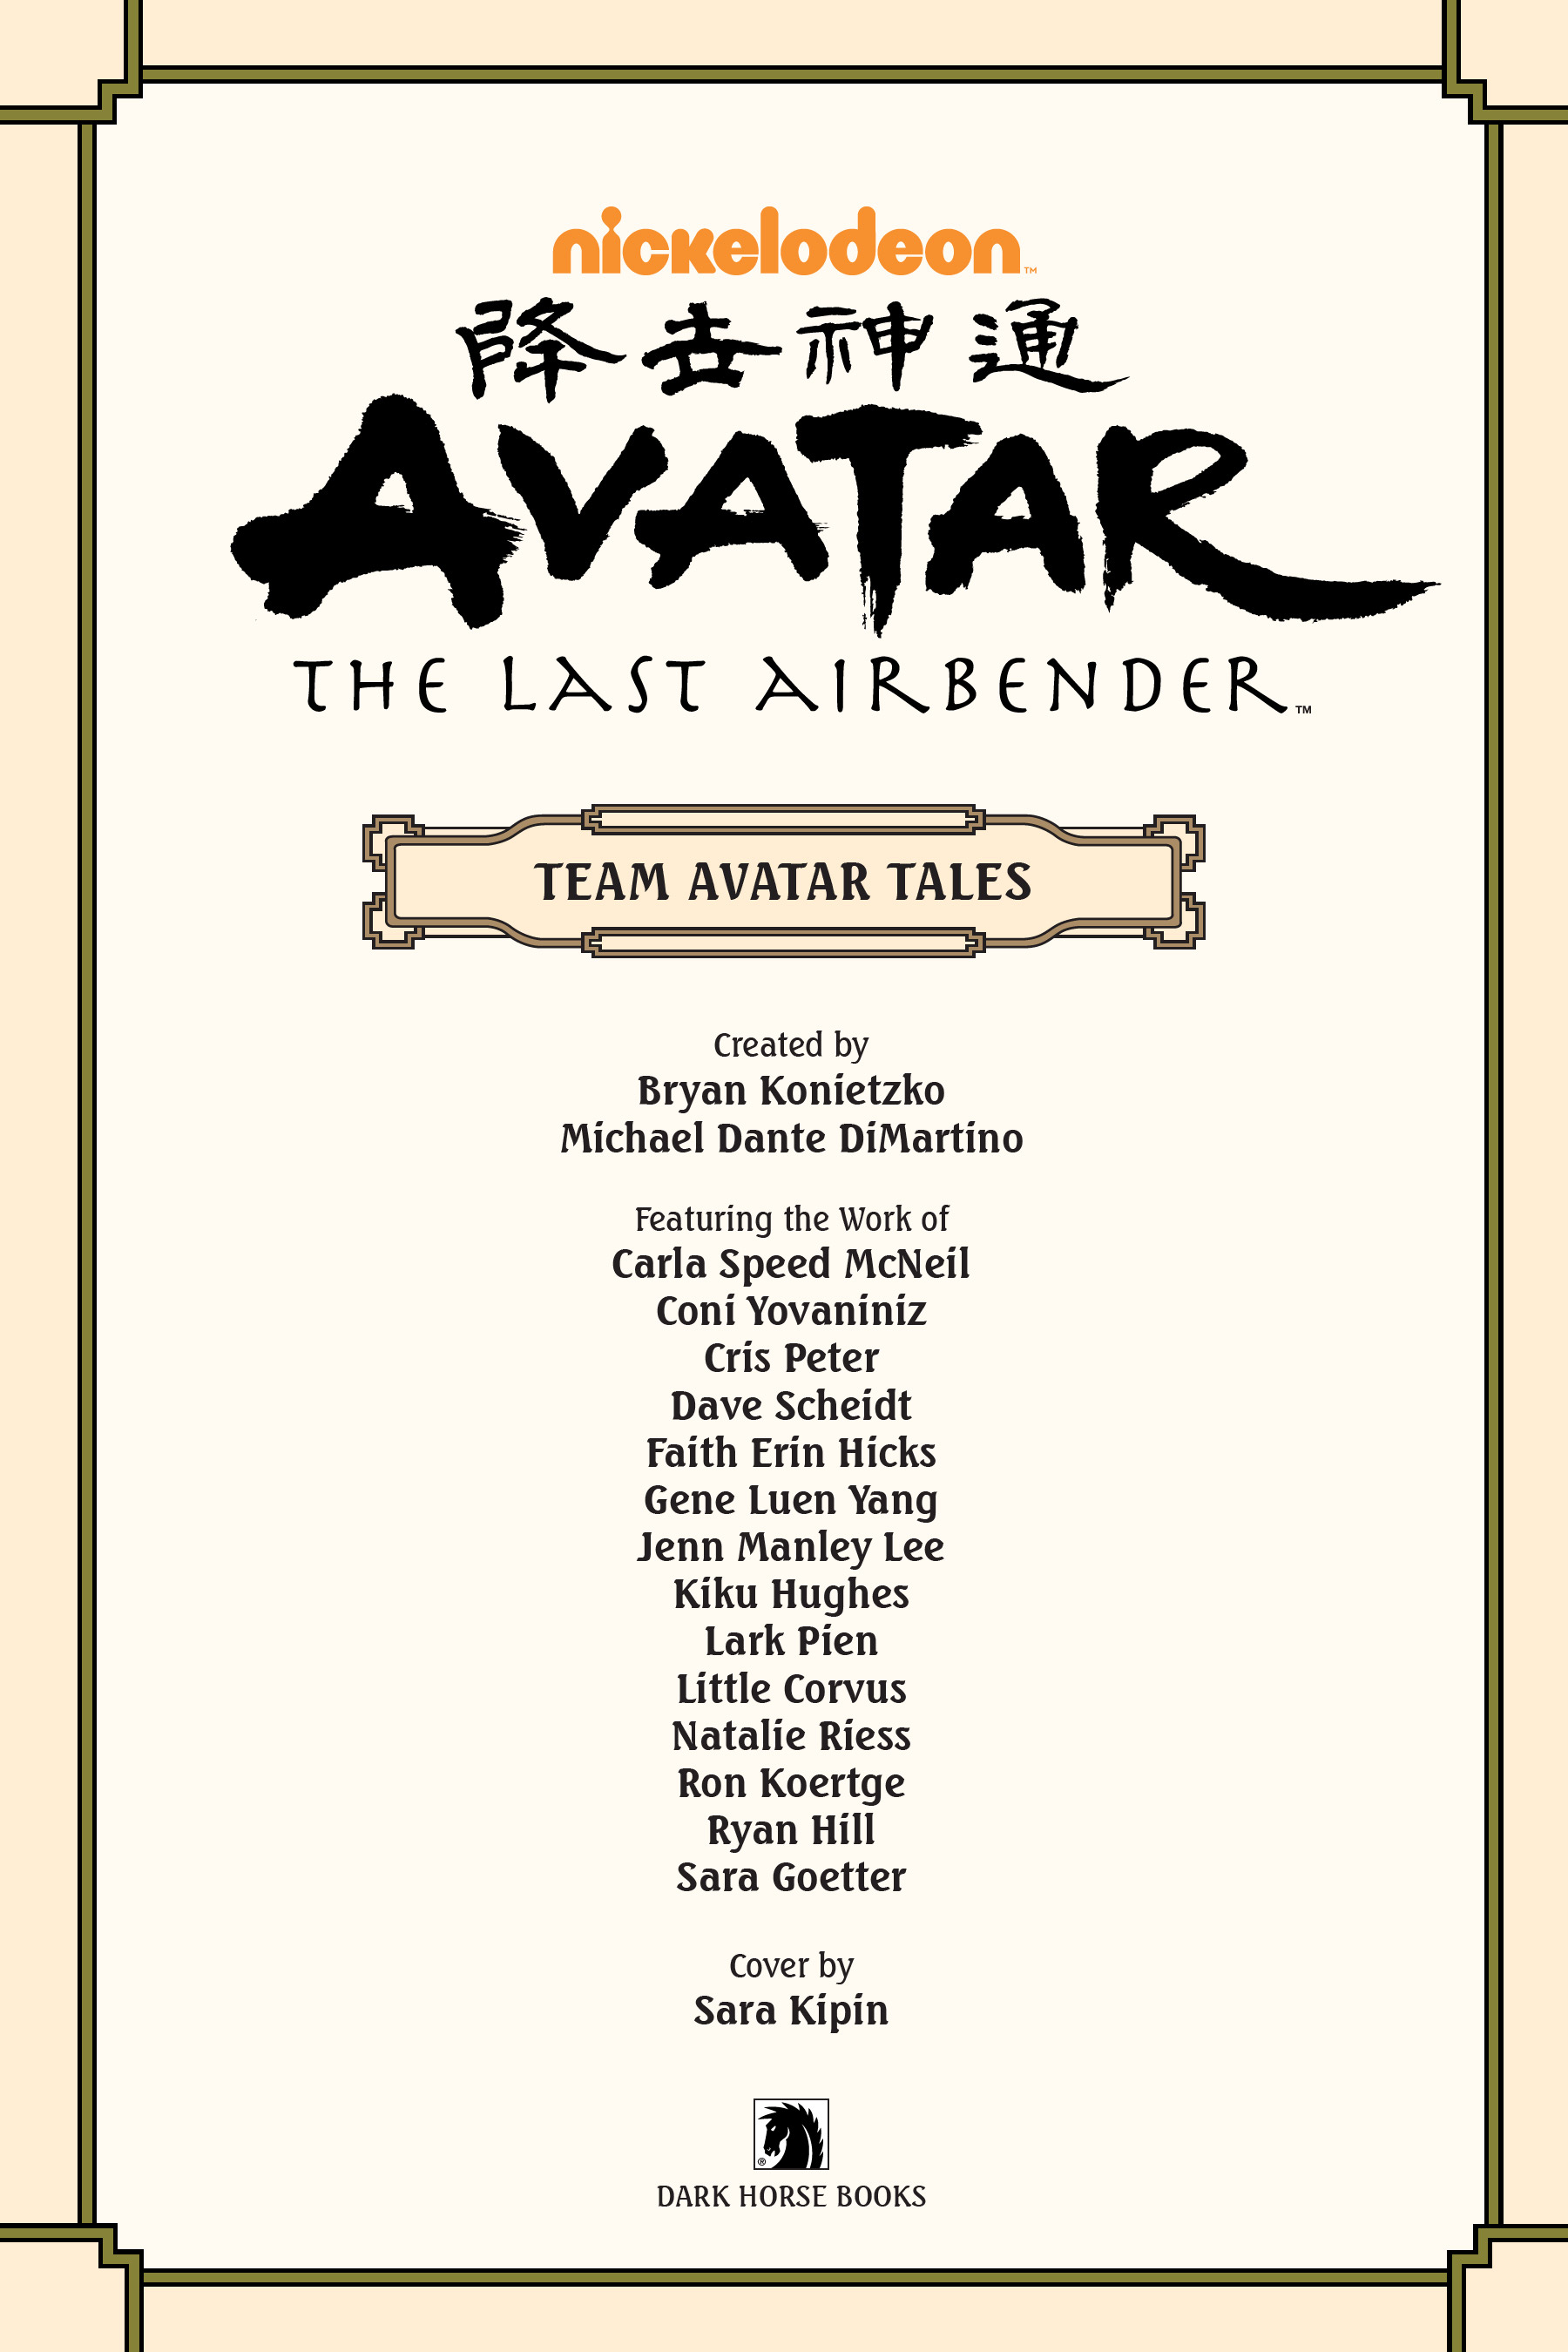 Read online Nickelodeon Avatar: The Last Airbender - Team Avatar Tales comic -  Issue # TPB - 2